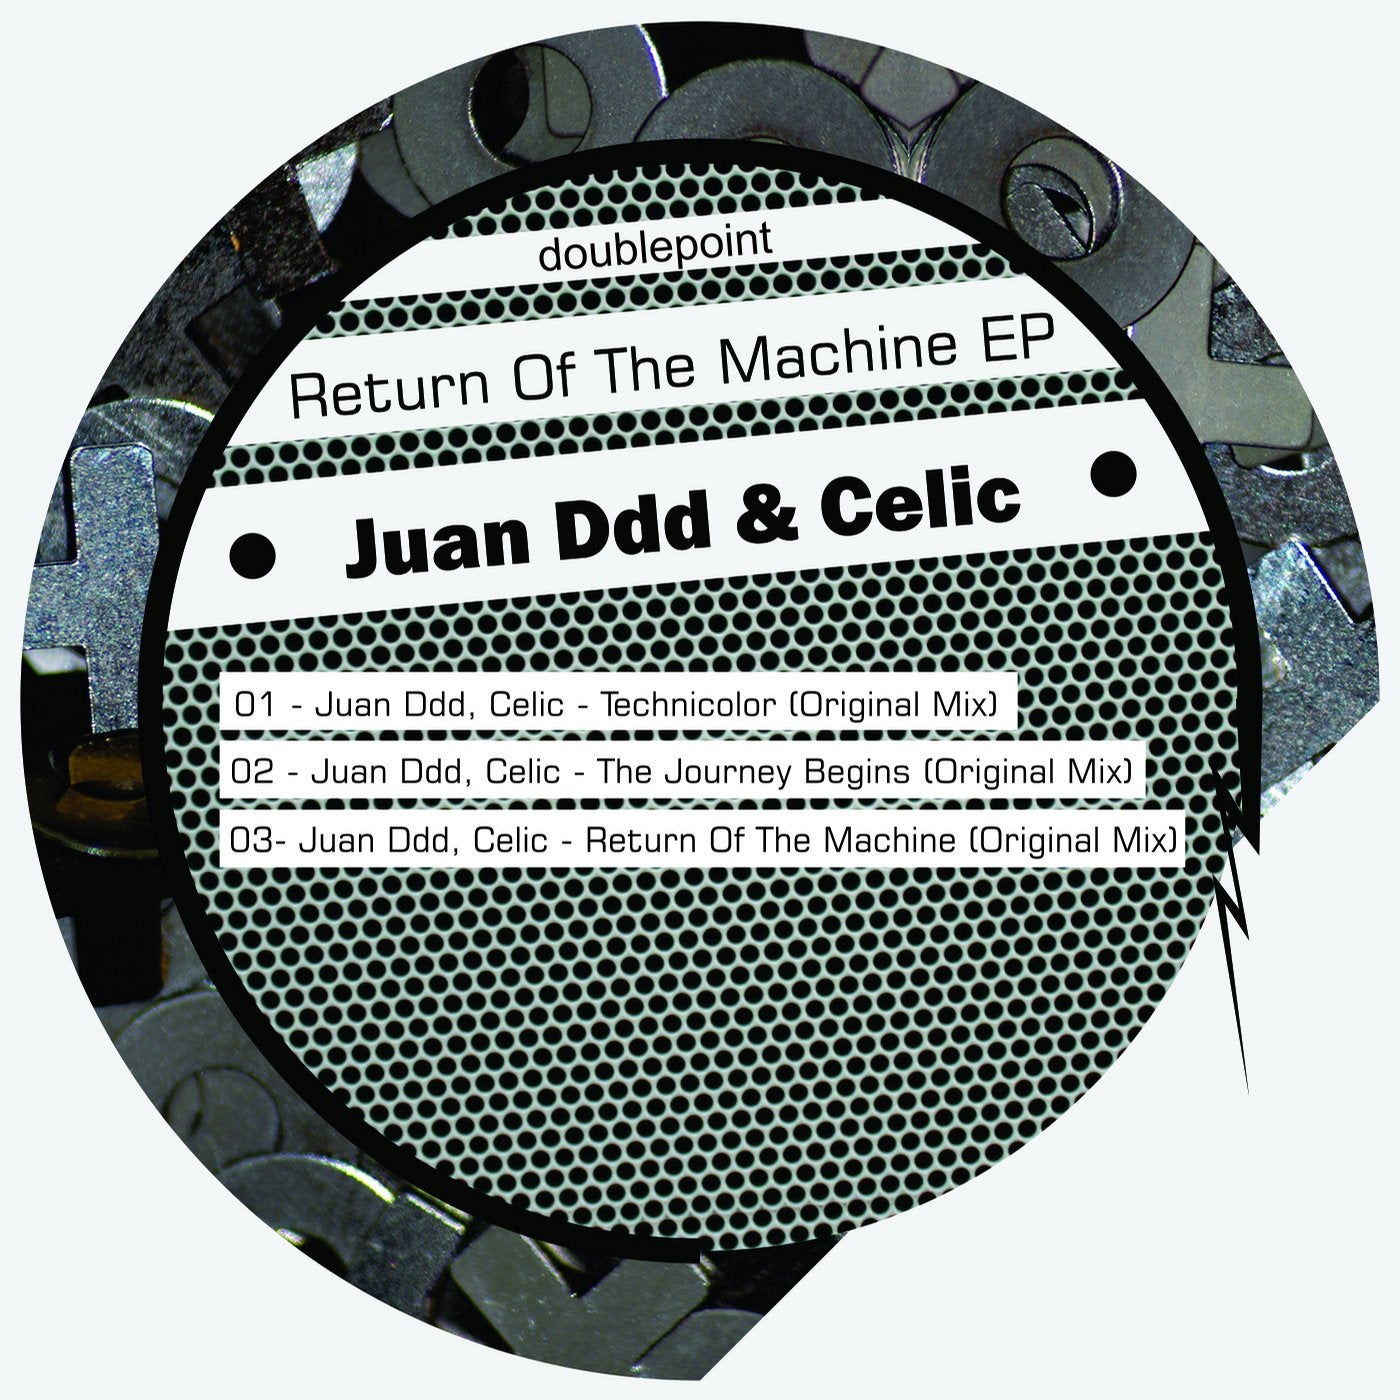 Return Of The Machine EP